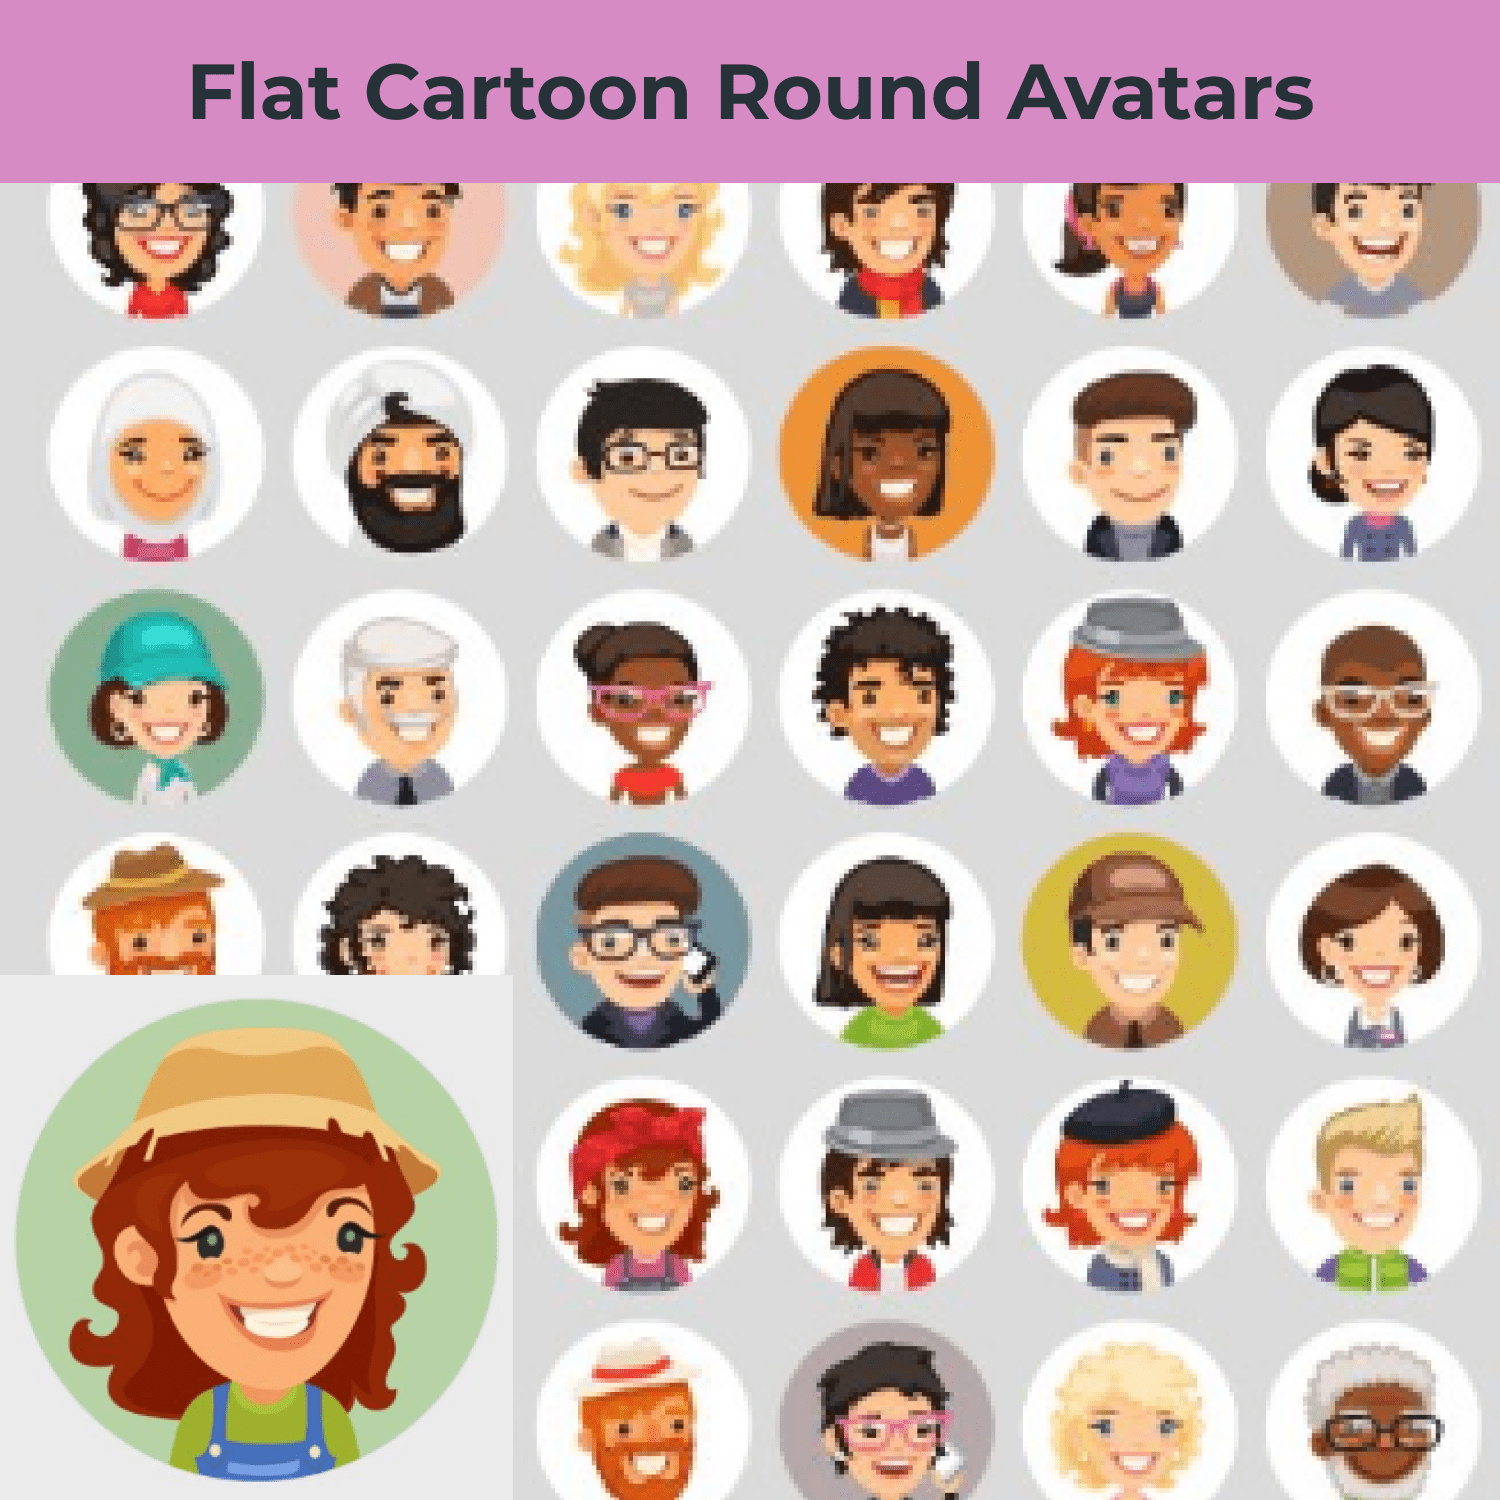 Flat Cartoon Round Avatars main cover.